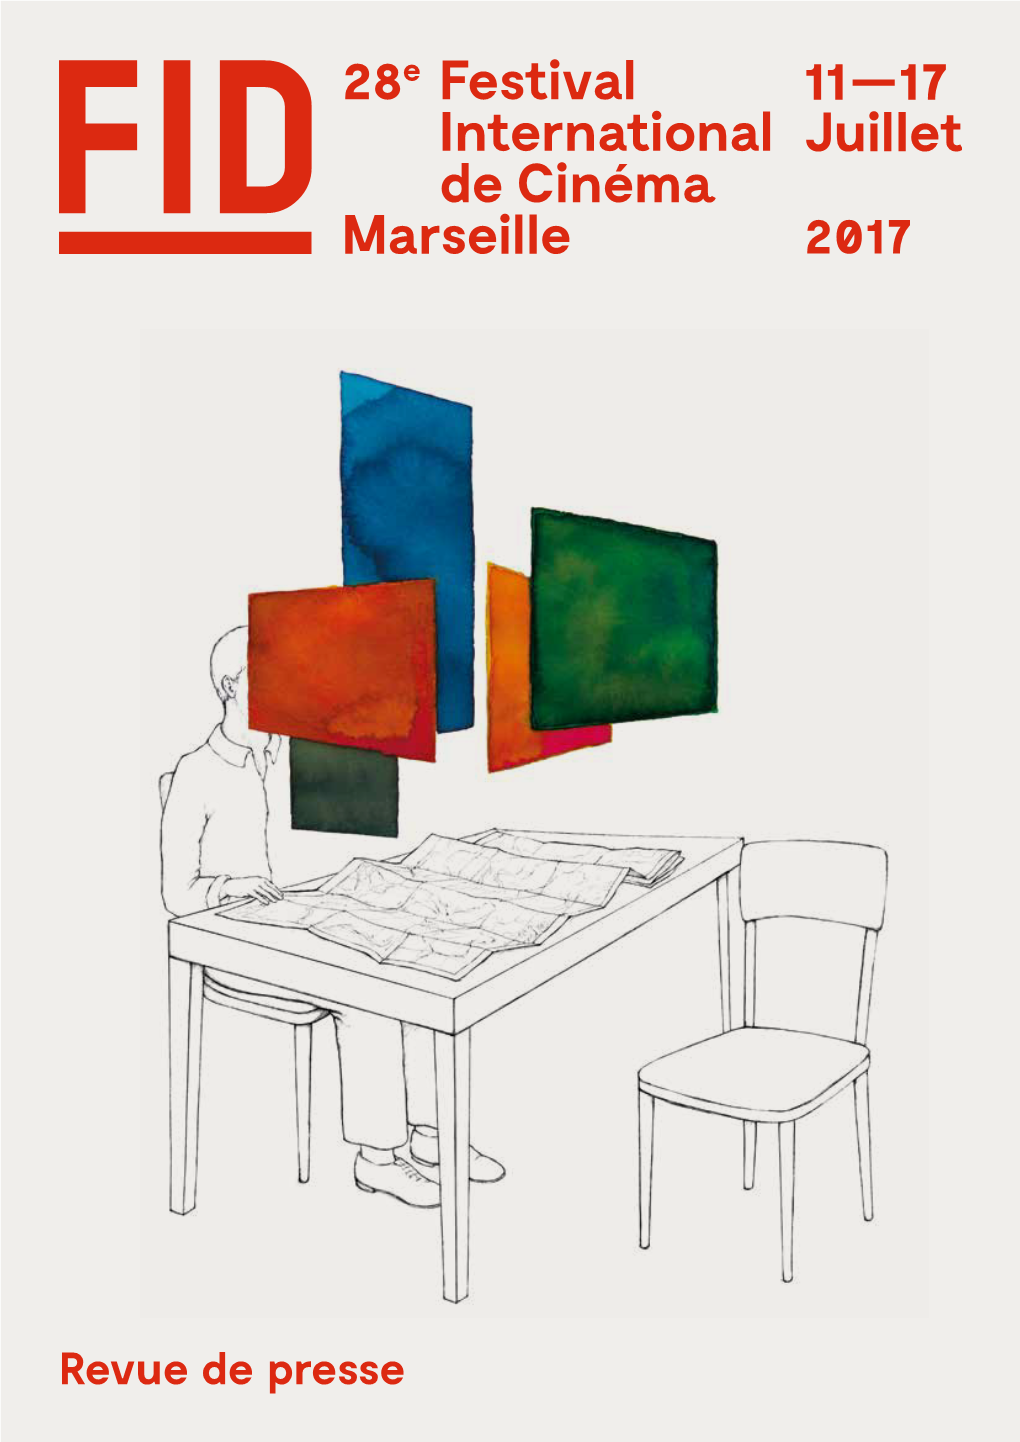 28E Festival International Marseille 11—17 Juillet